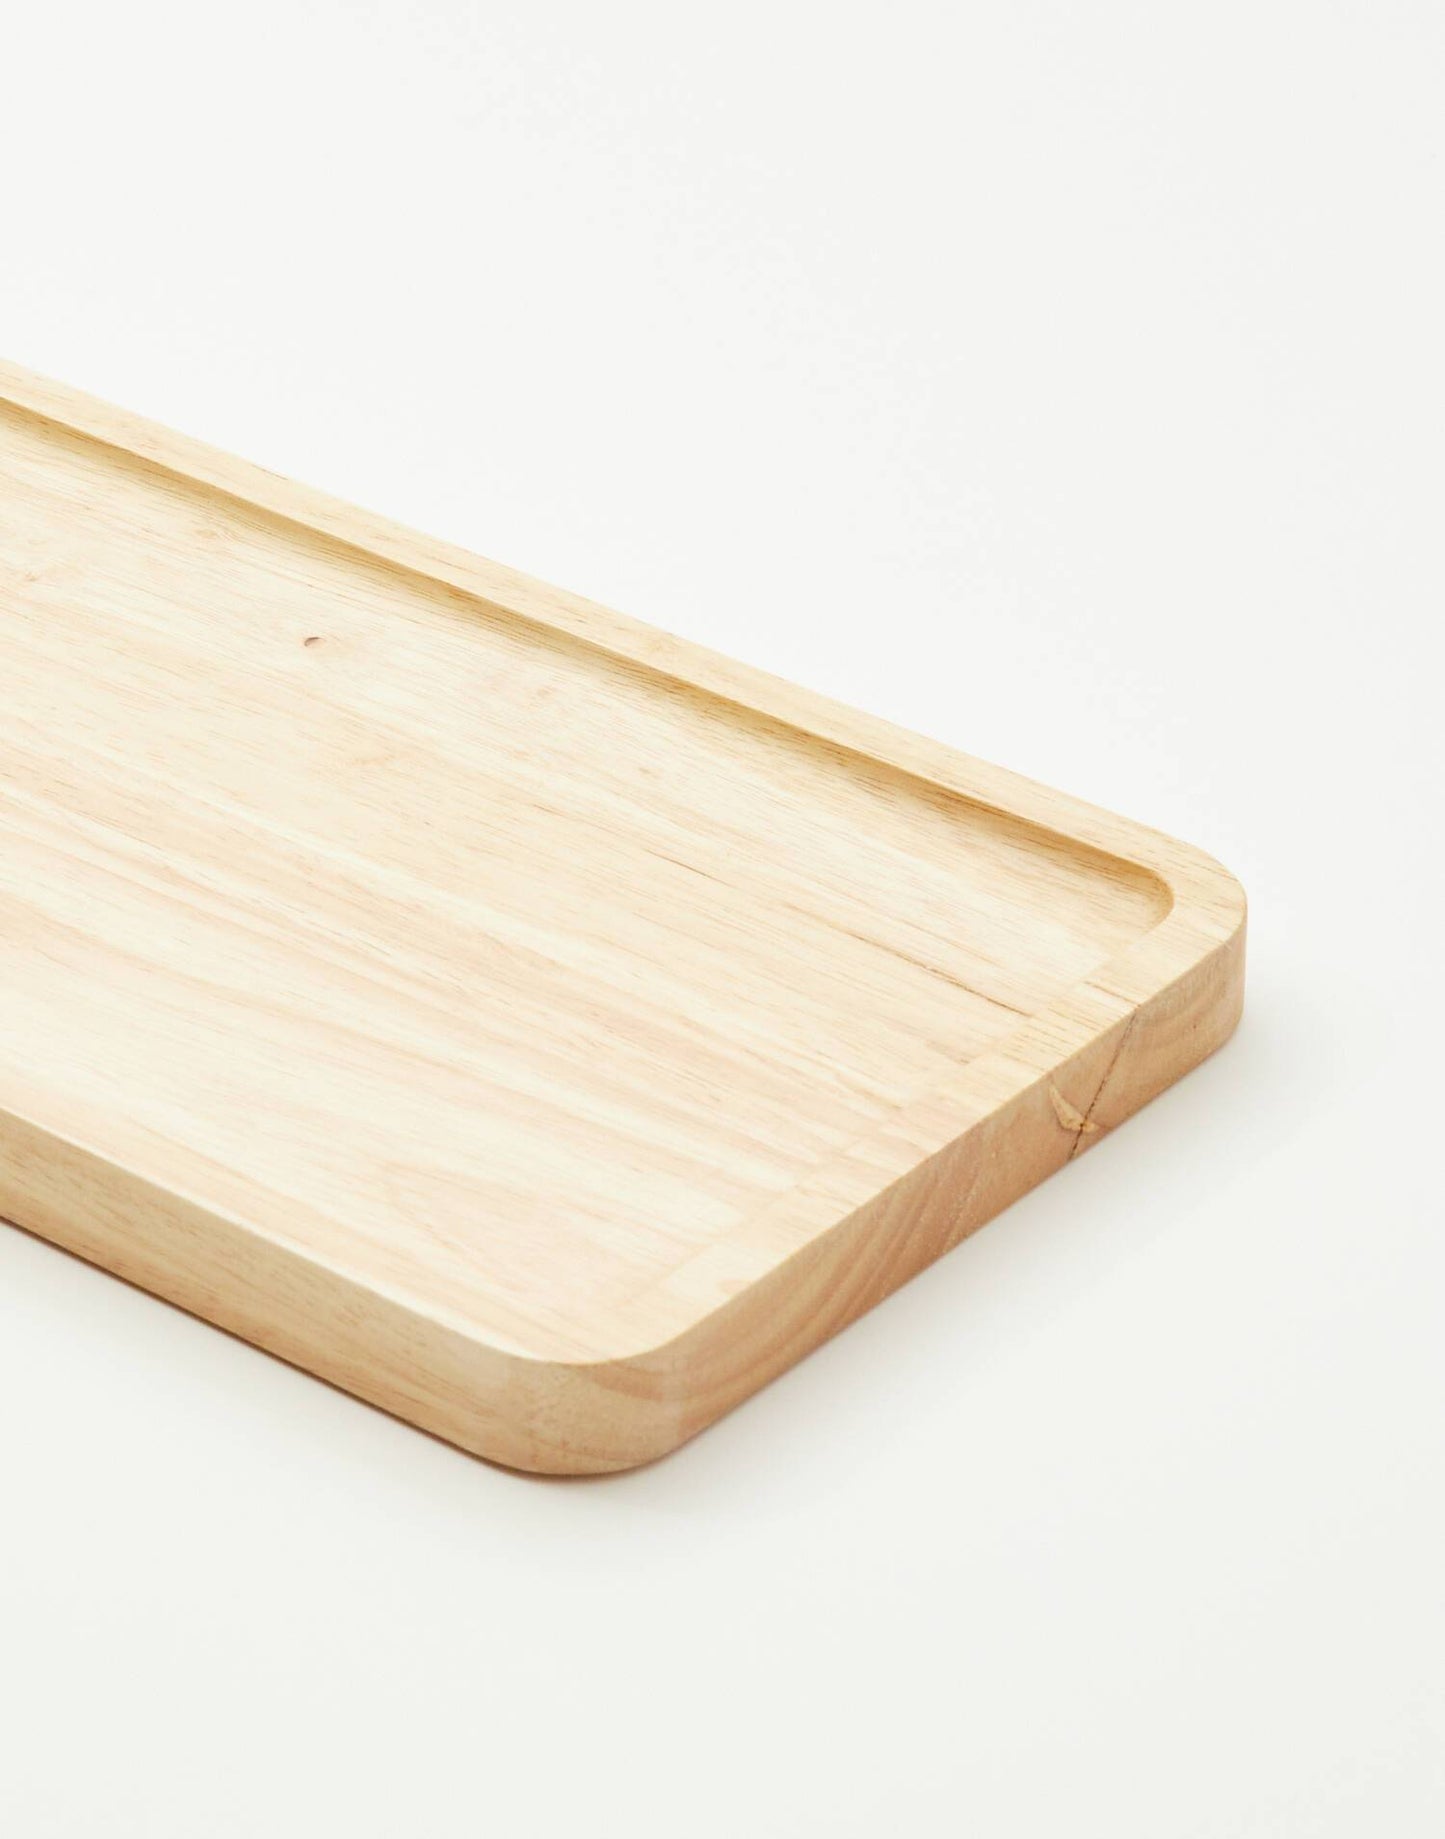 Bandeja de madera bandeja decorativa madera rectangular  natural 50×17×2.5cm-14281